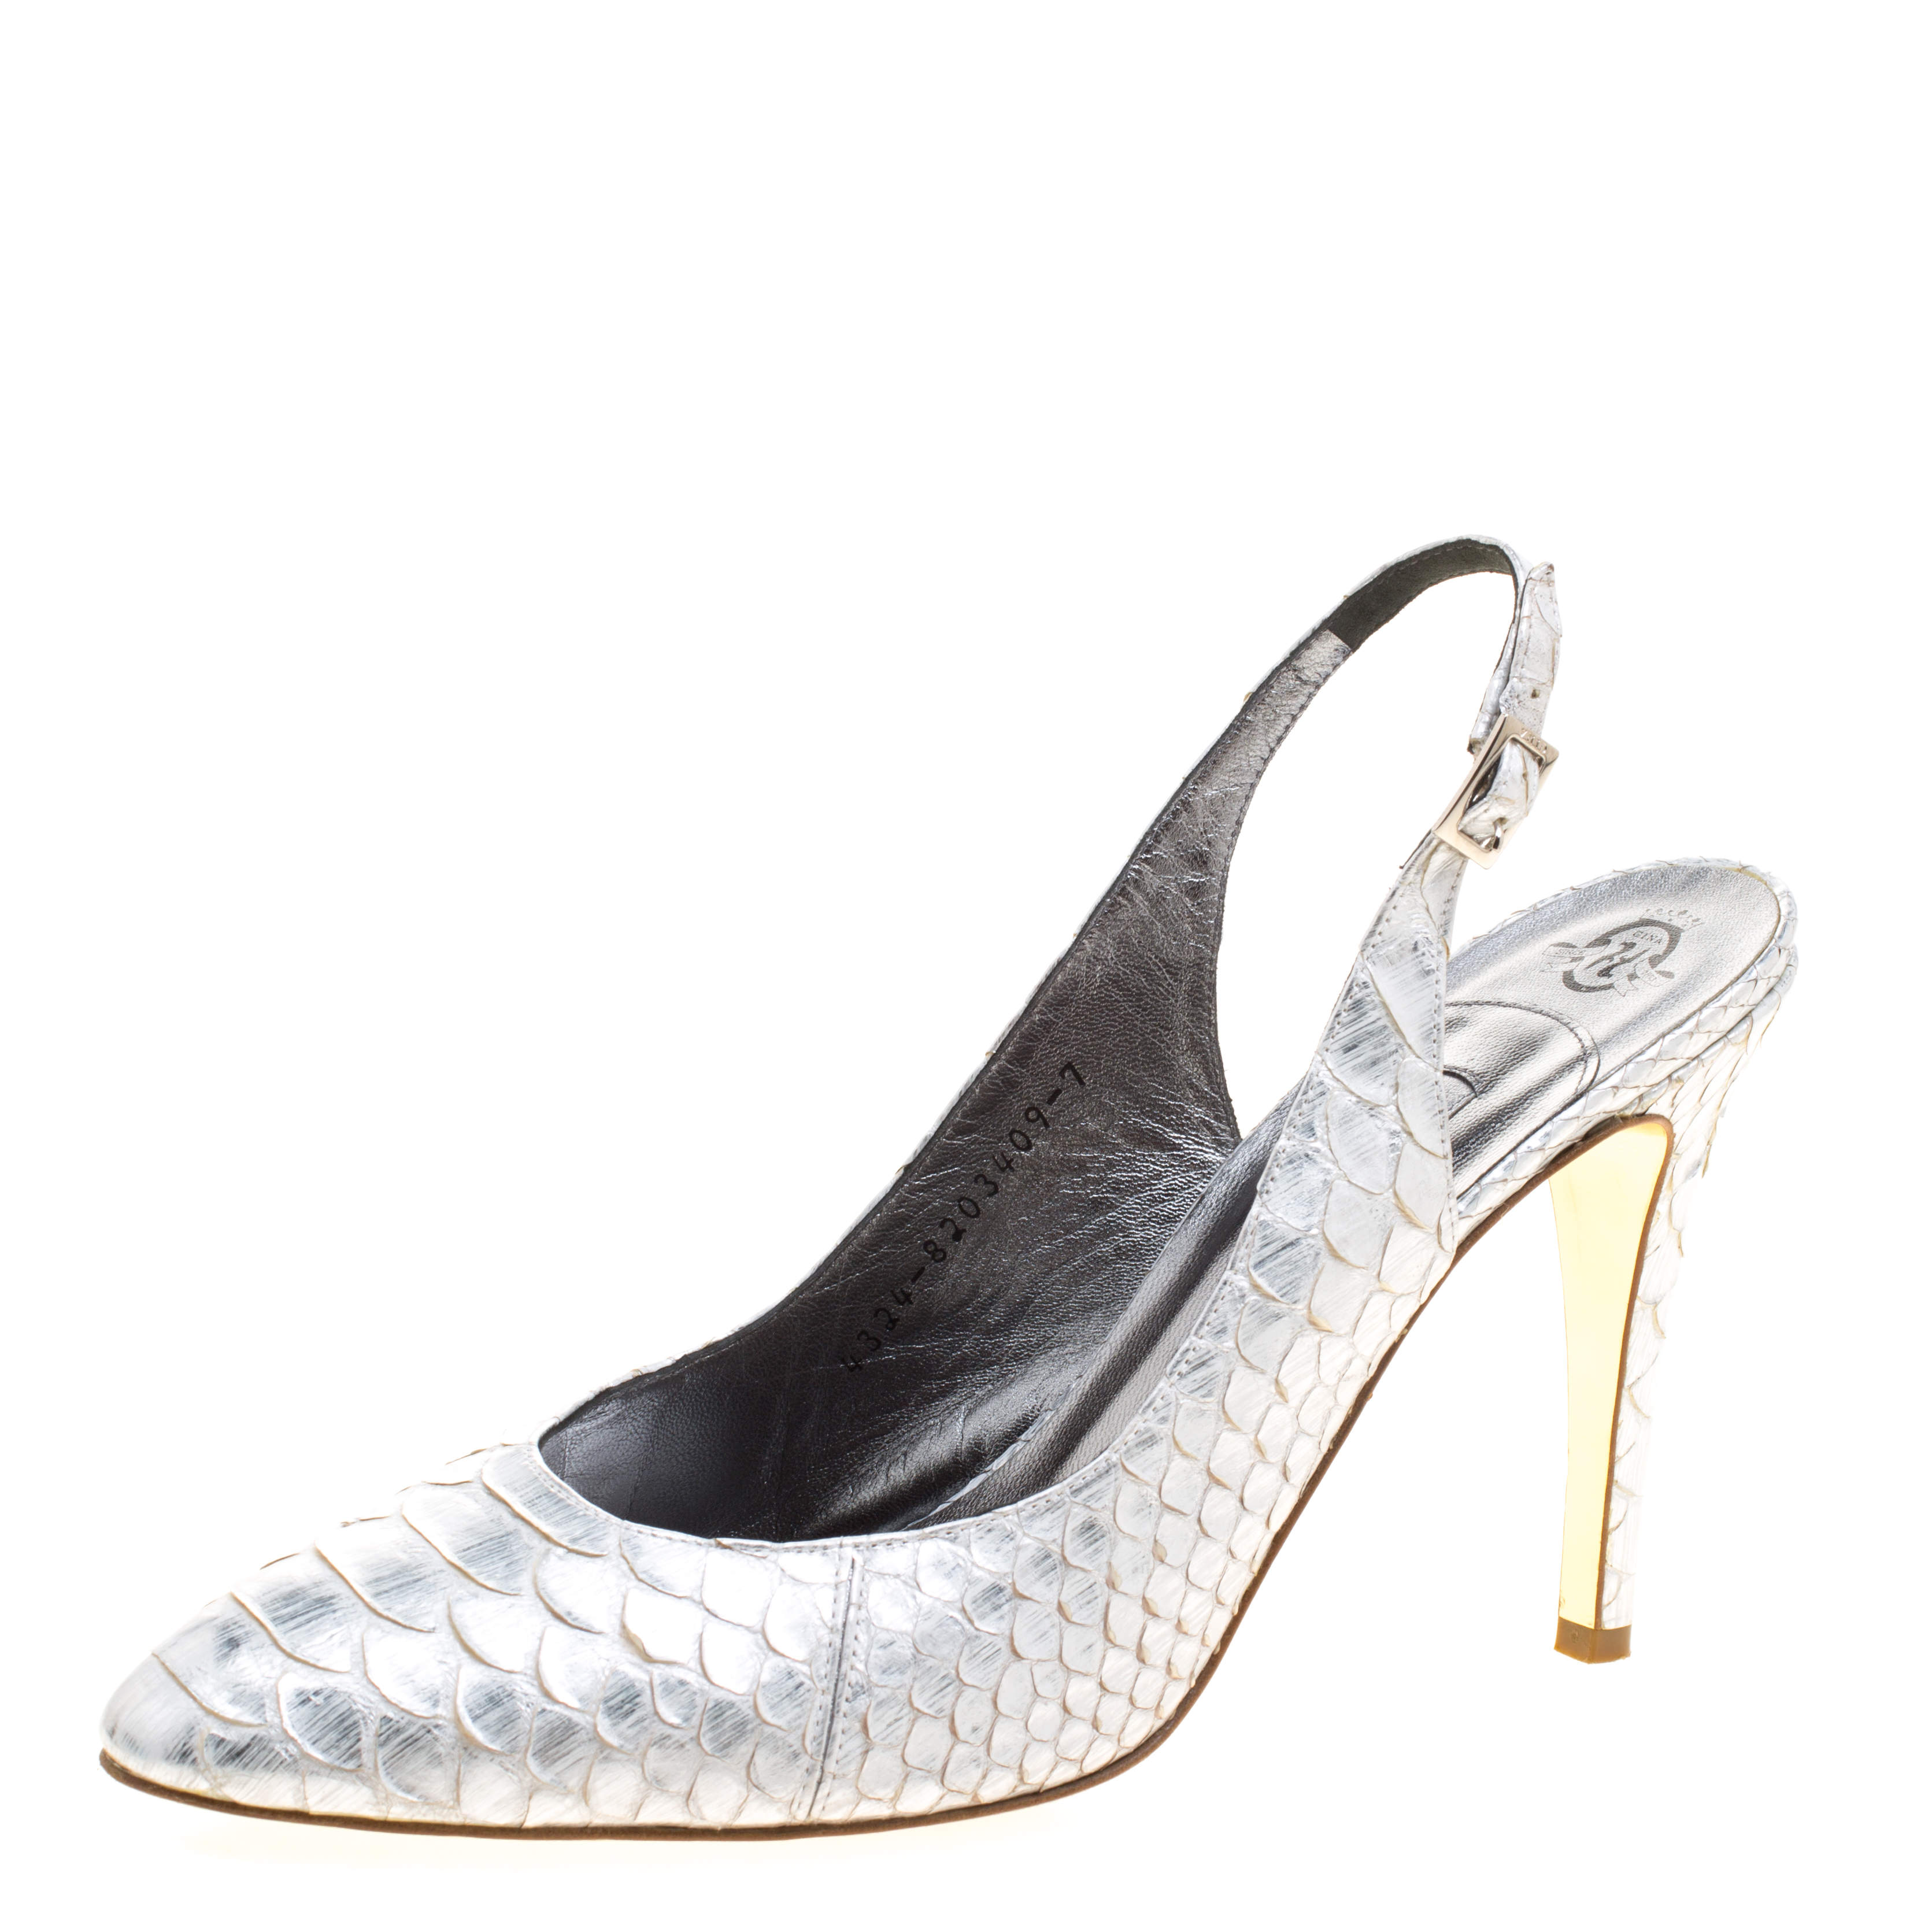 Gina Silver Chrome Python Slingback Sandals Size 40